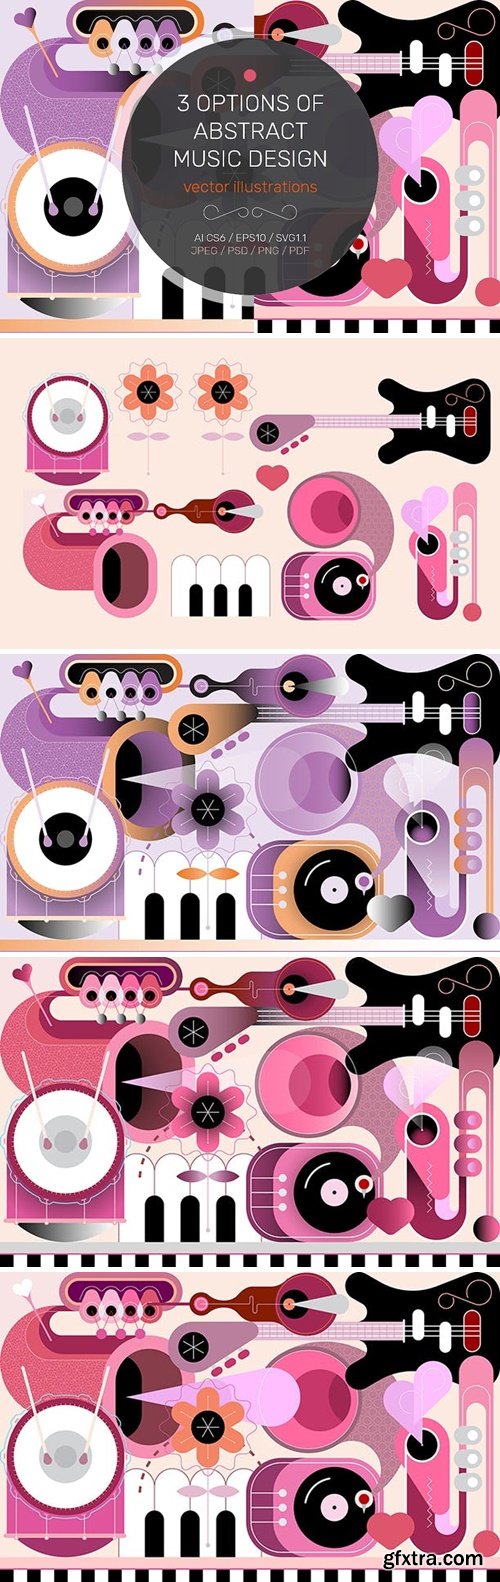 Abstract Musical Design vector illustration NV4YVTJ